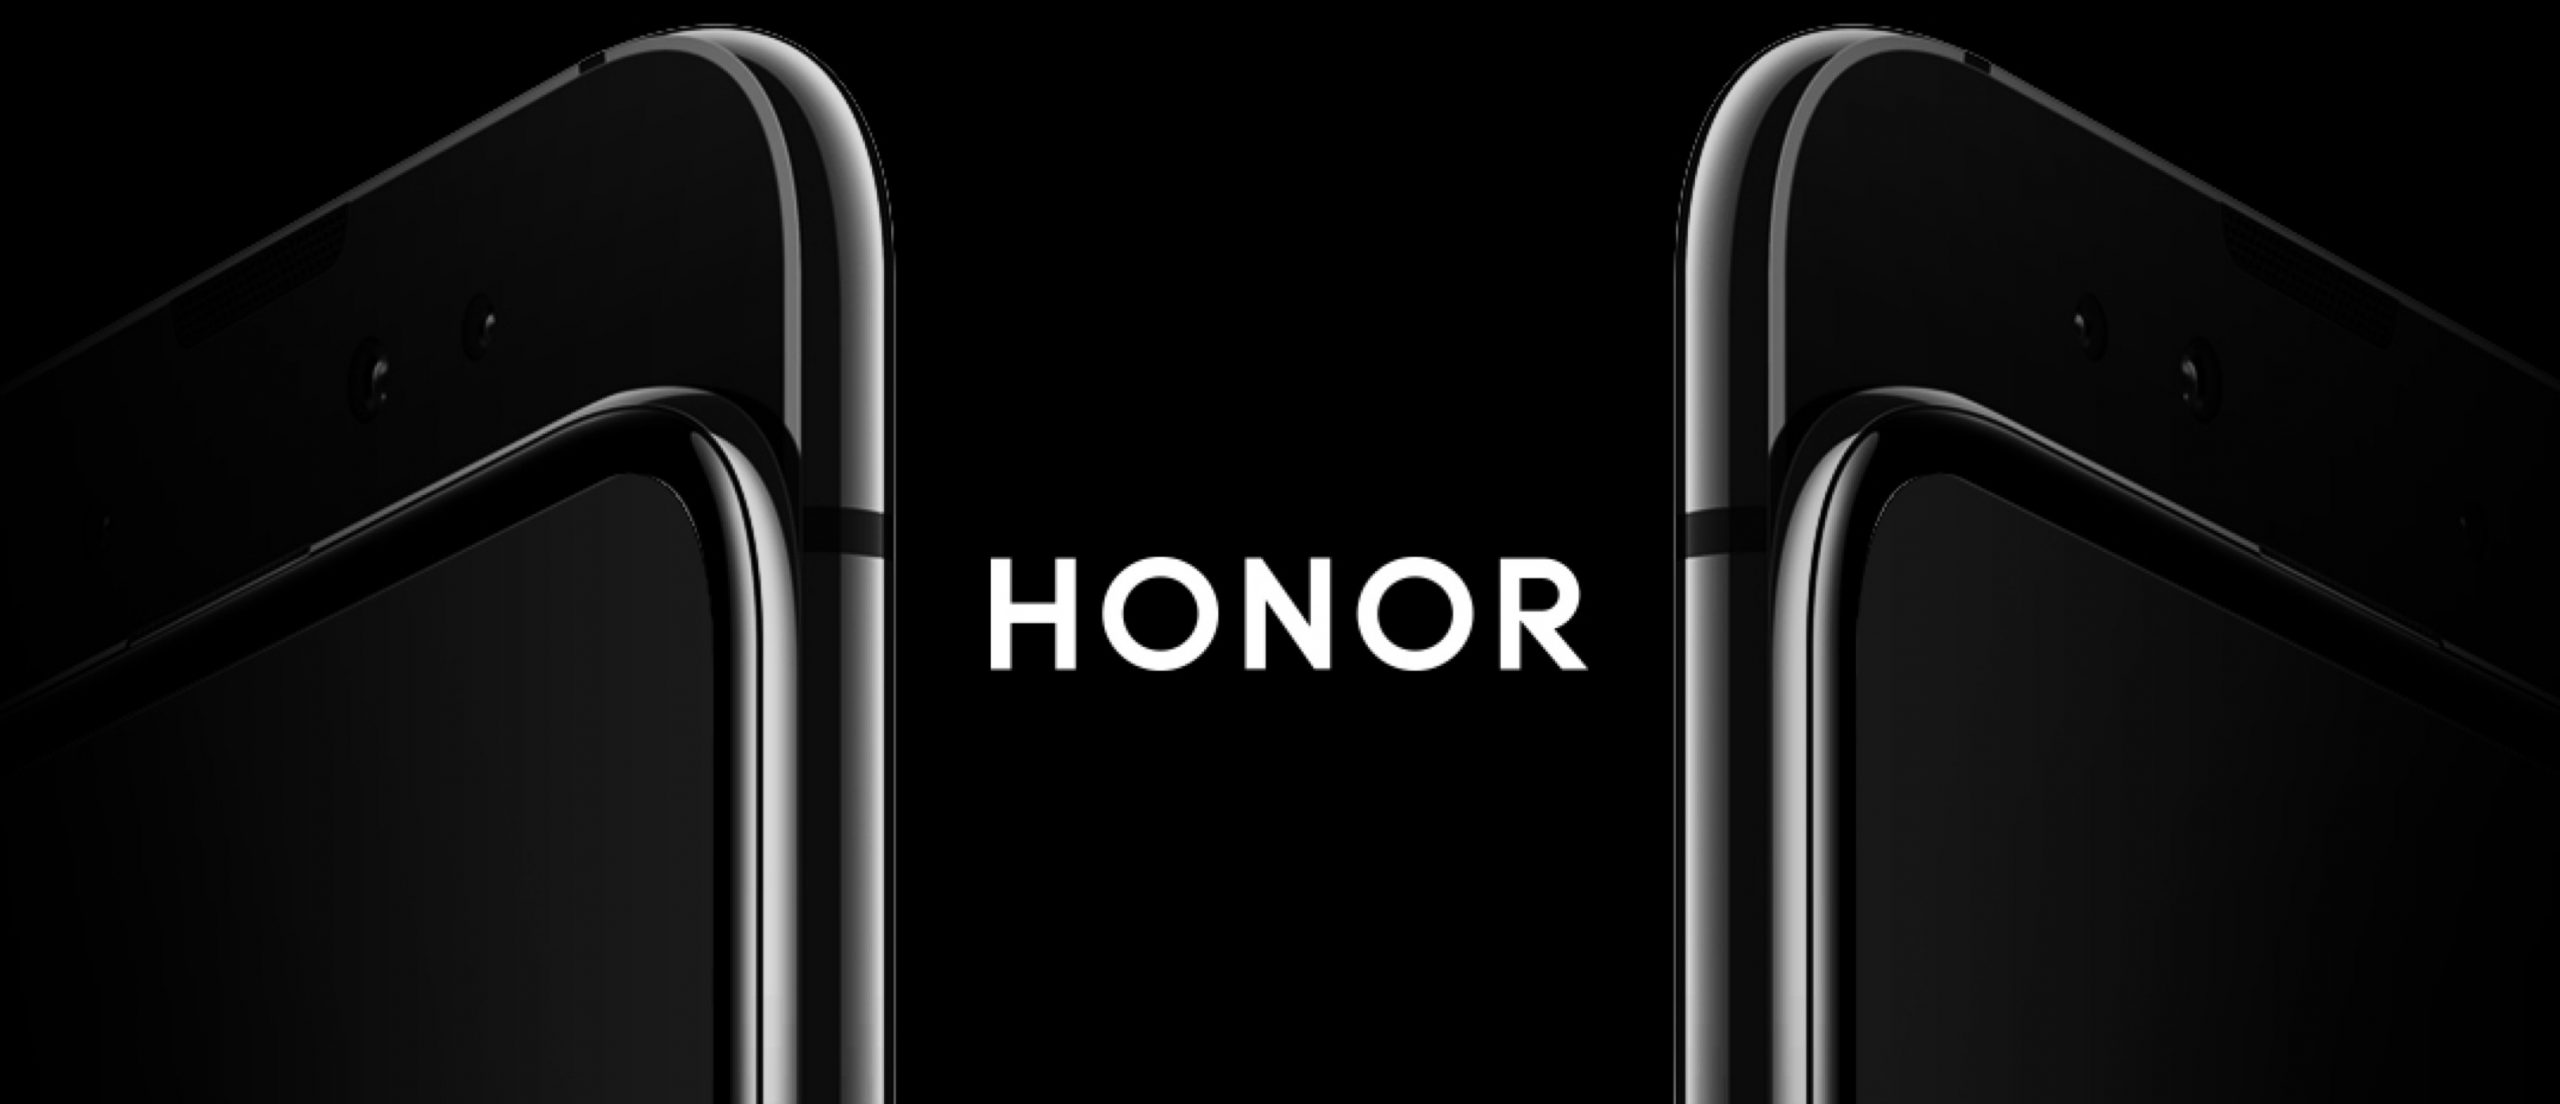 Honor логотип